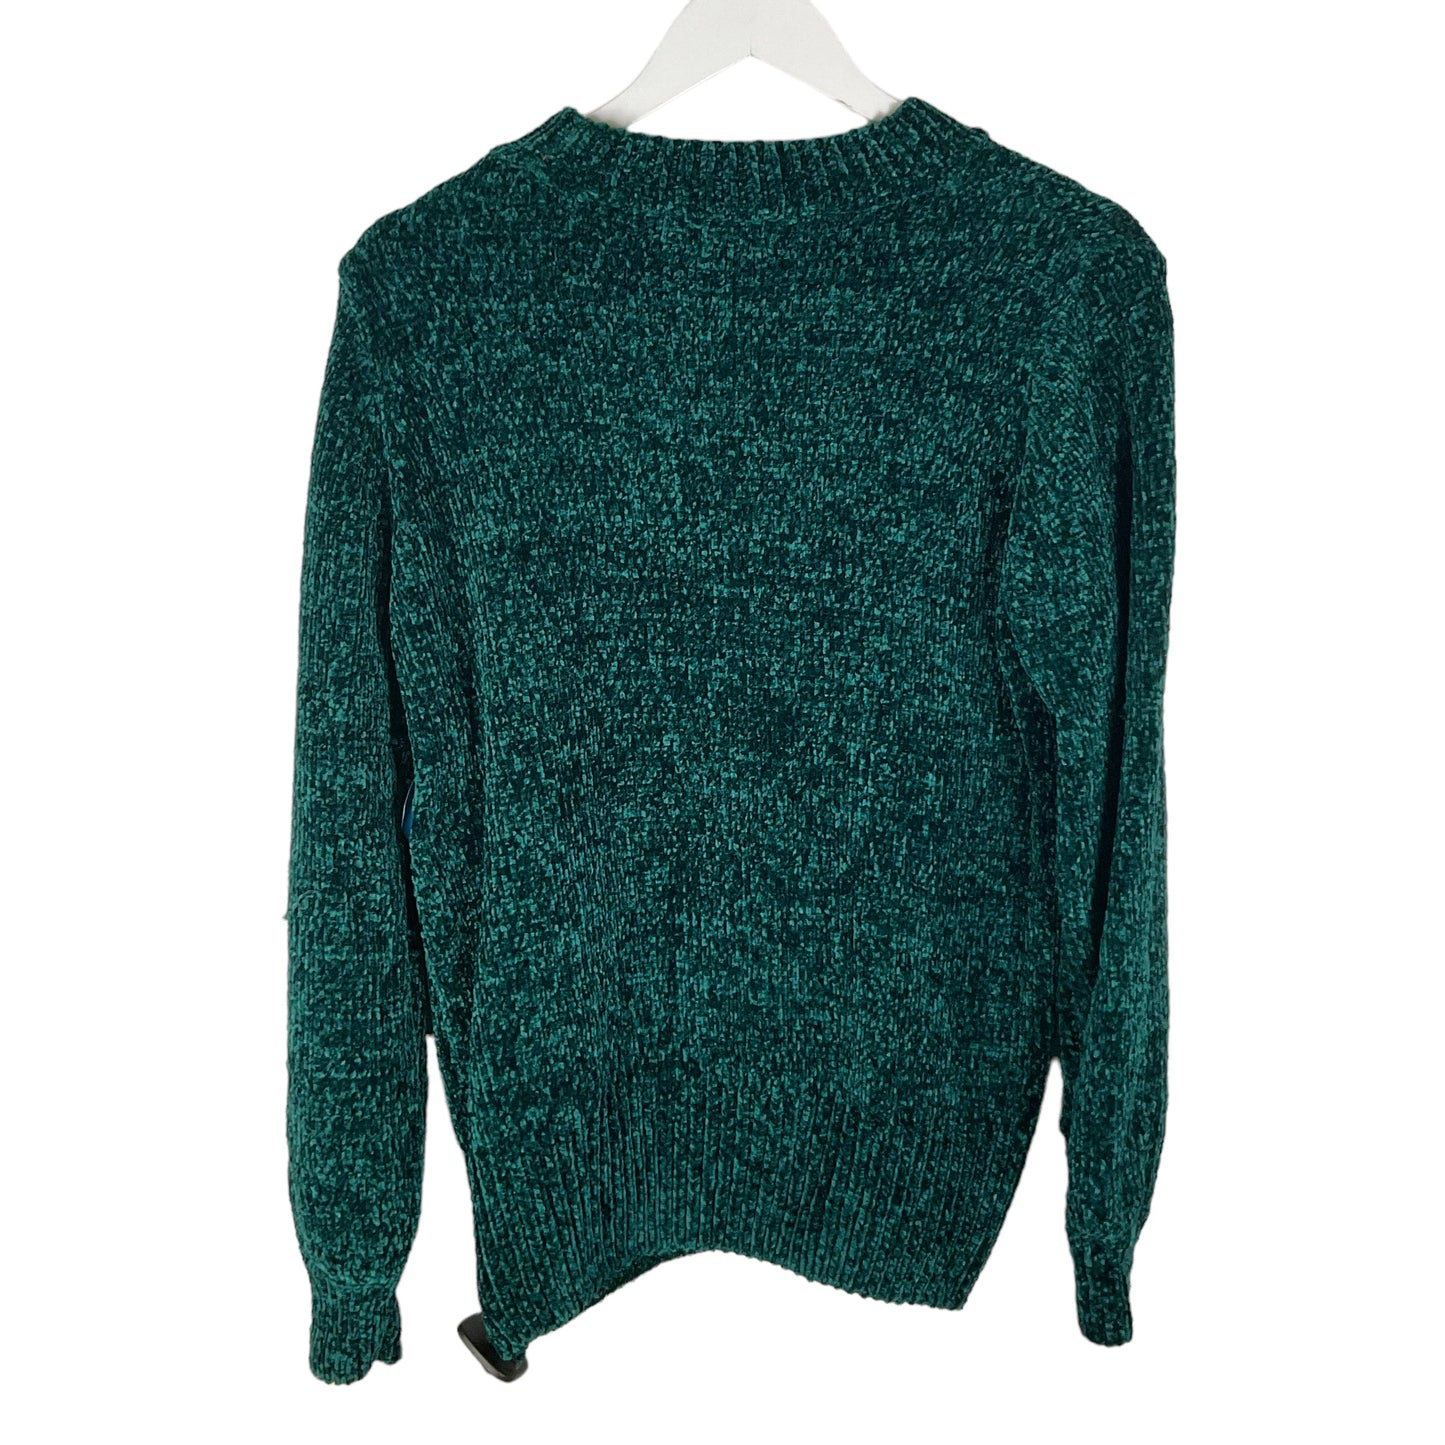 Sweater By Zenana Outfitters  Size: Xs